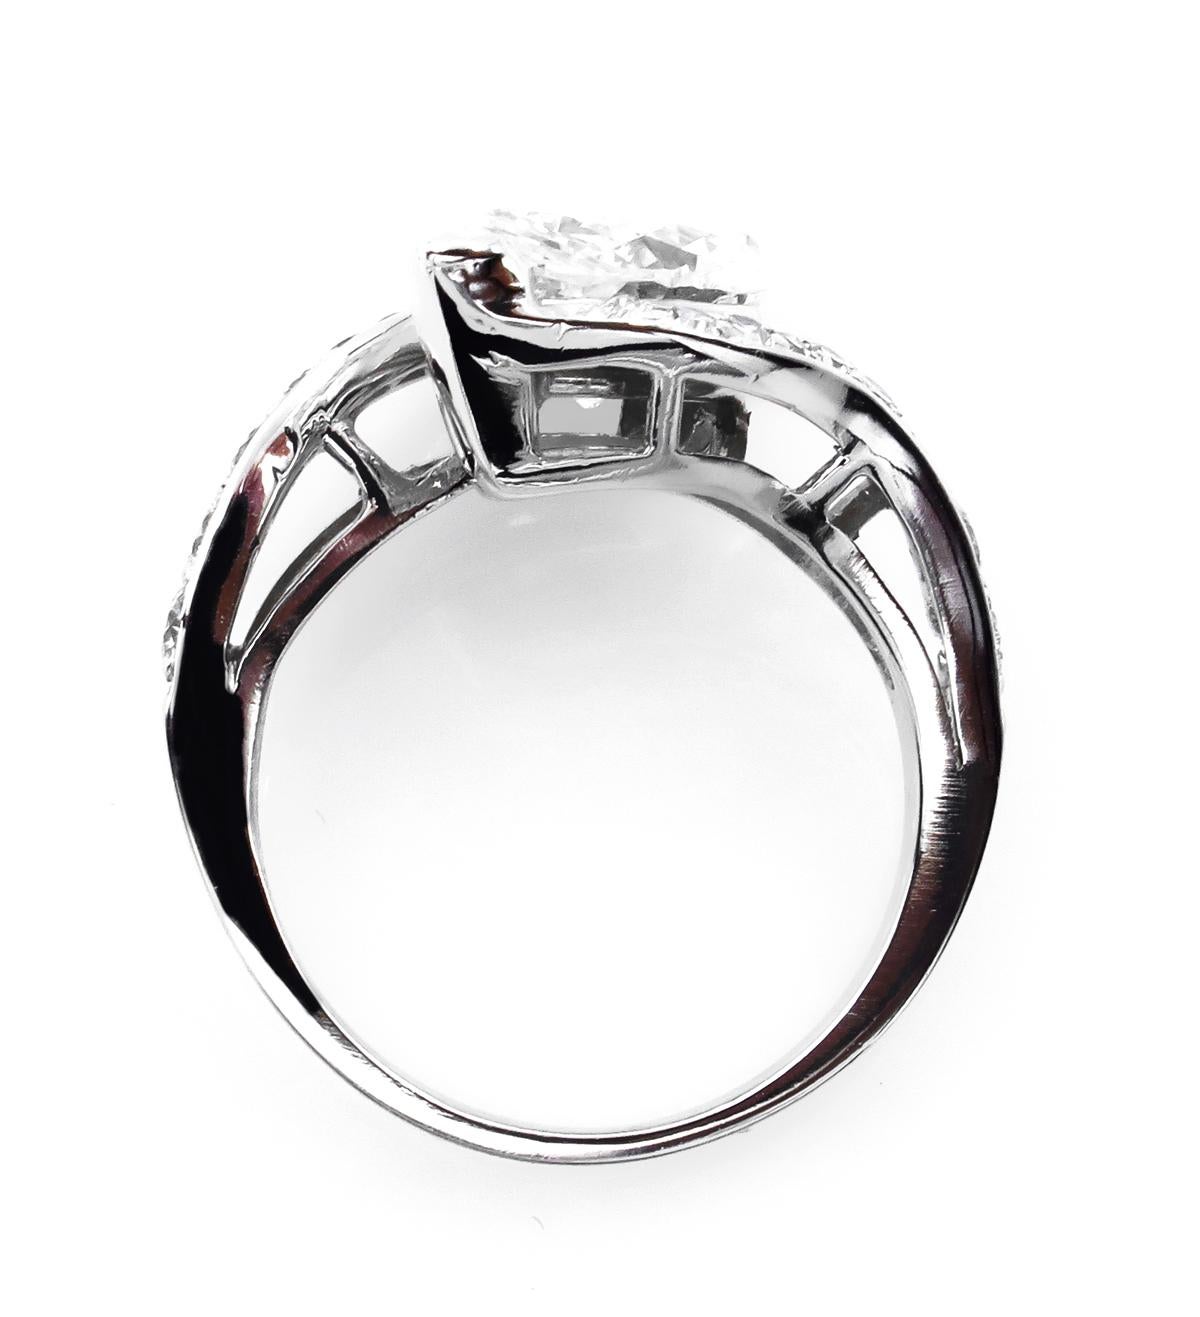 3.5 carat marquise diamond ring